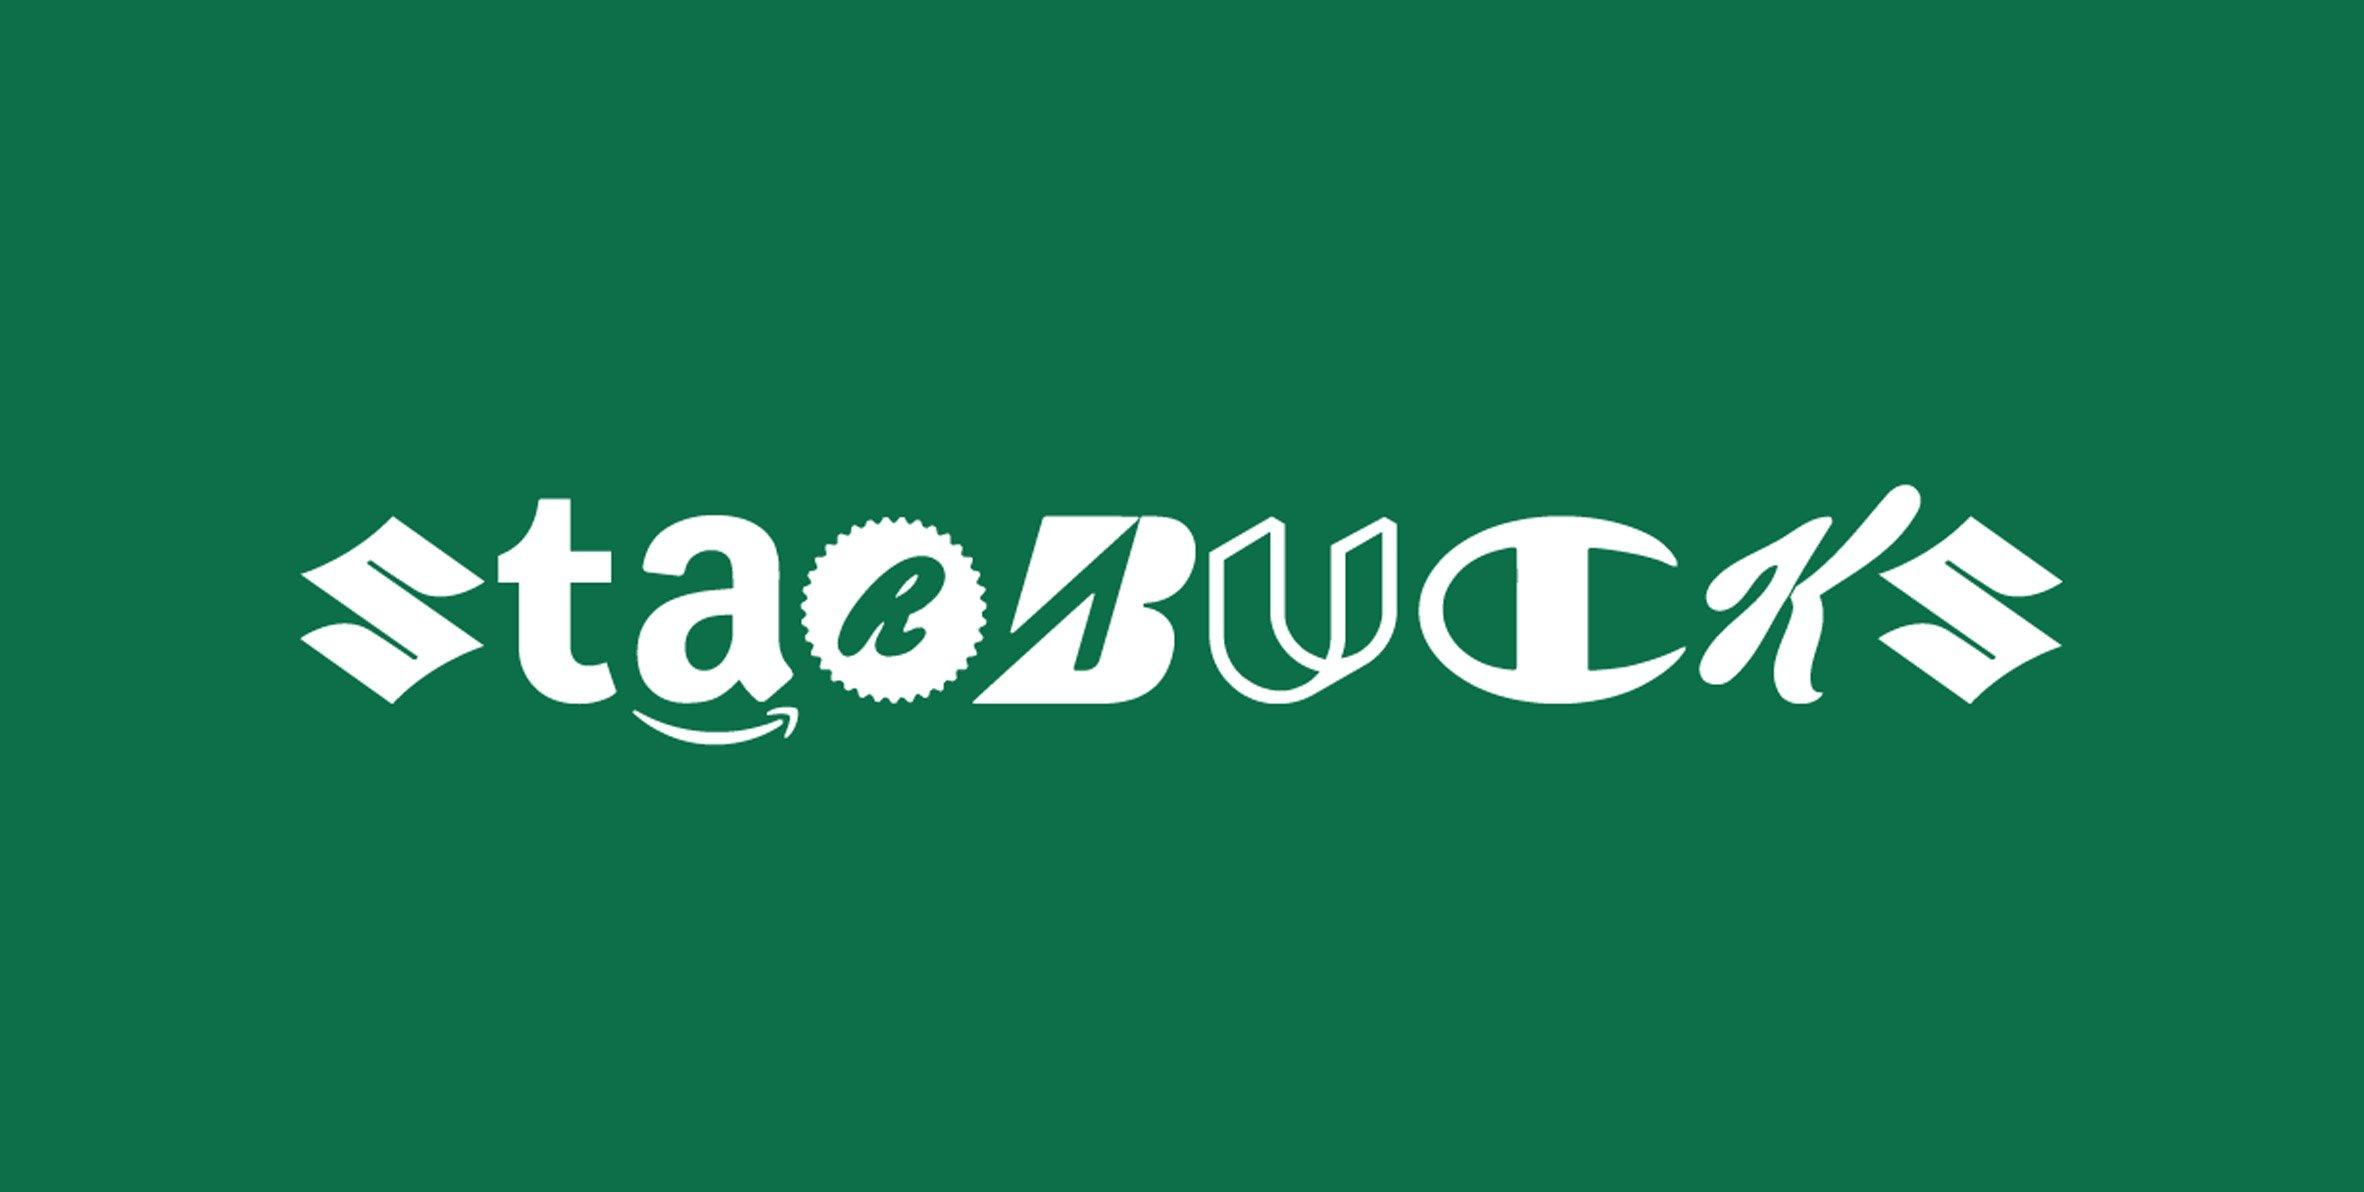 Brand New Roman Font Logo Starbucks